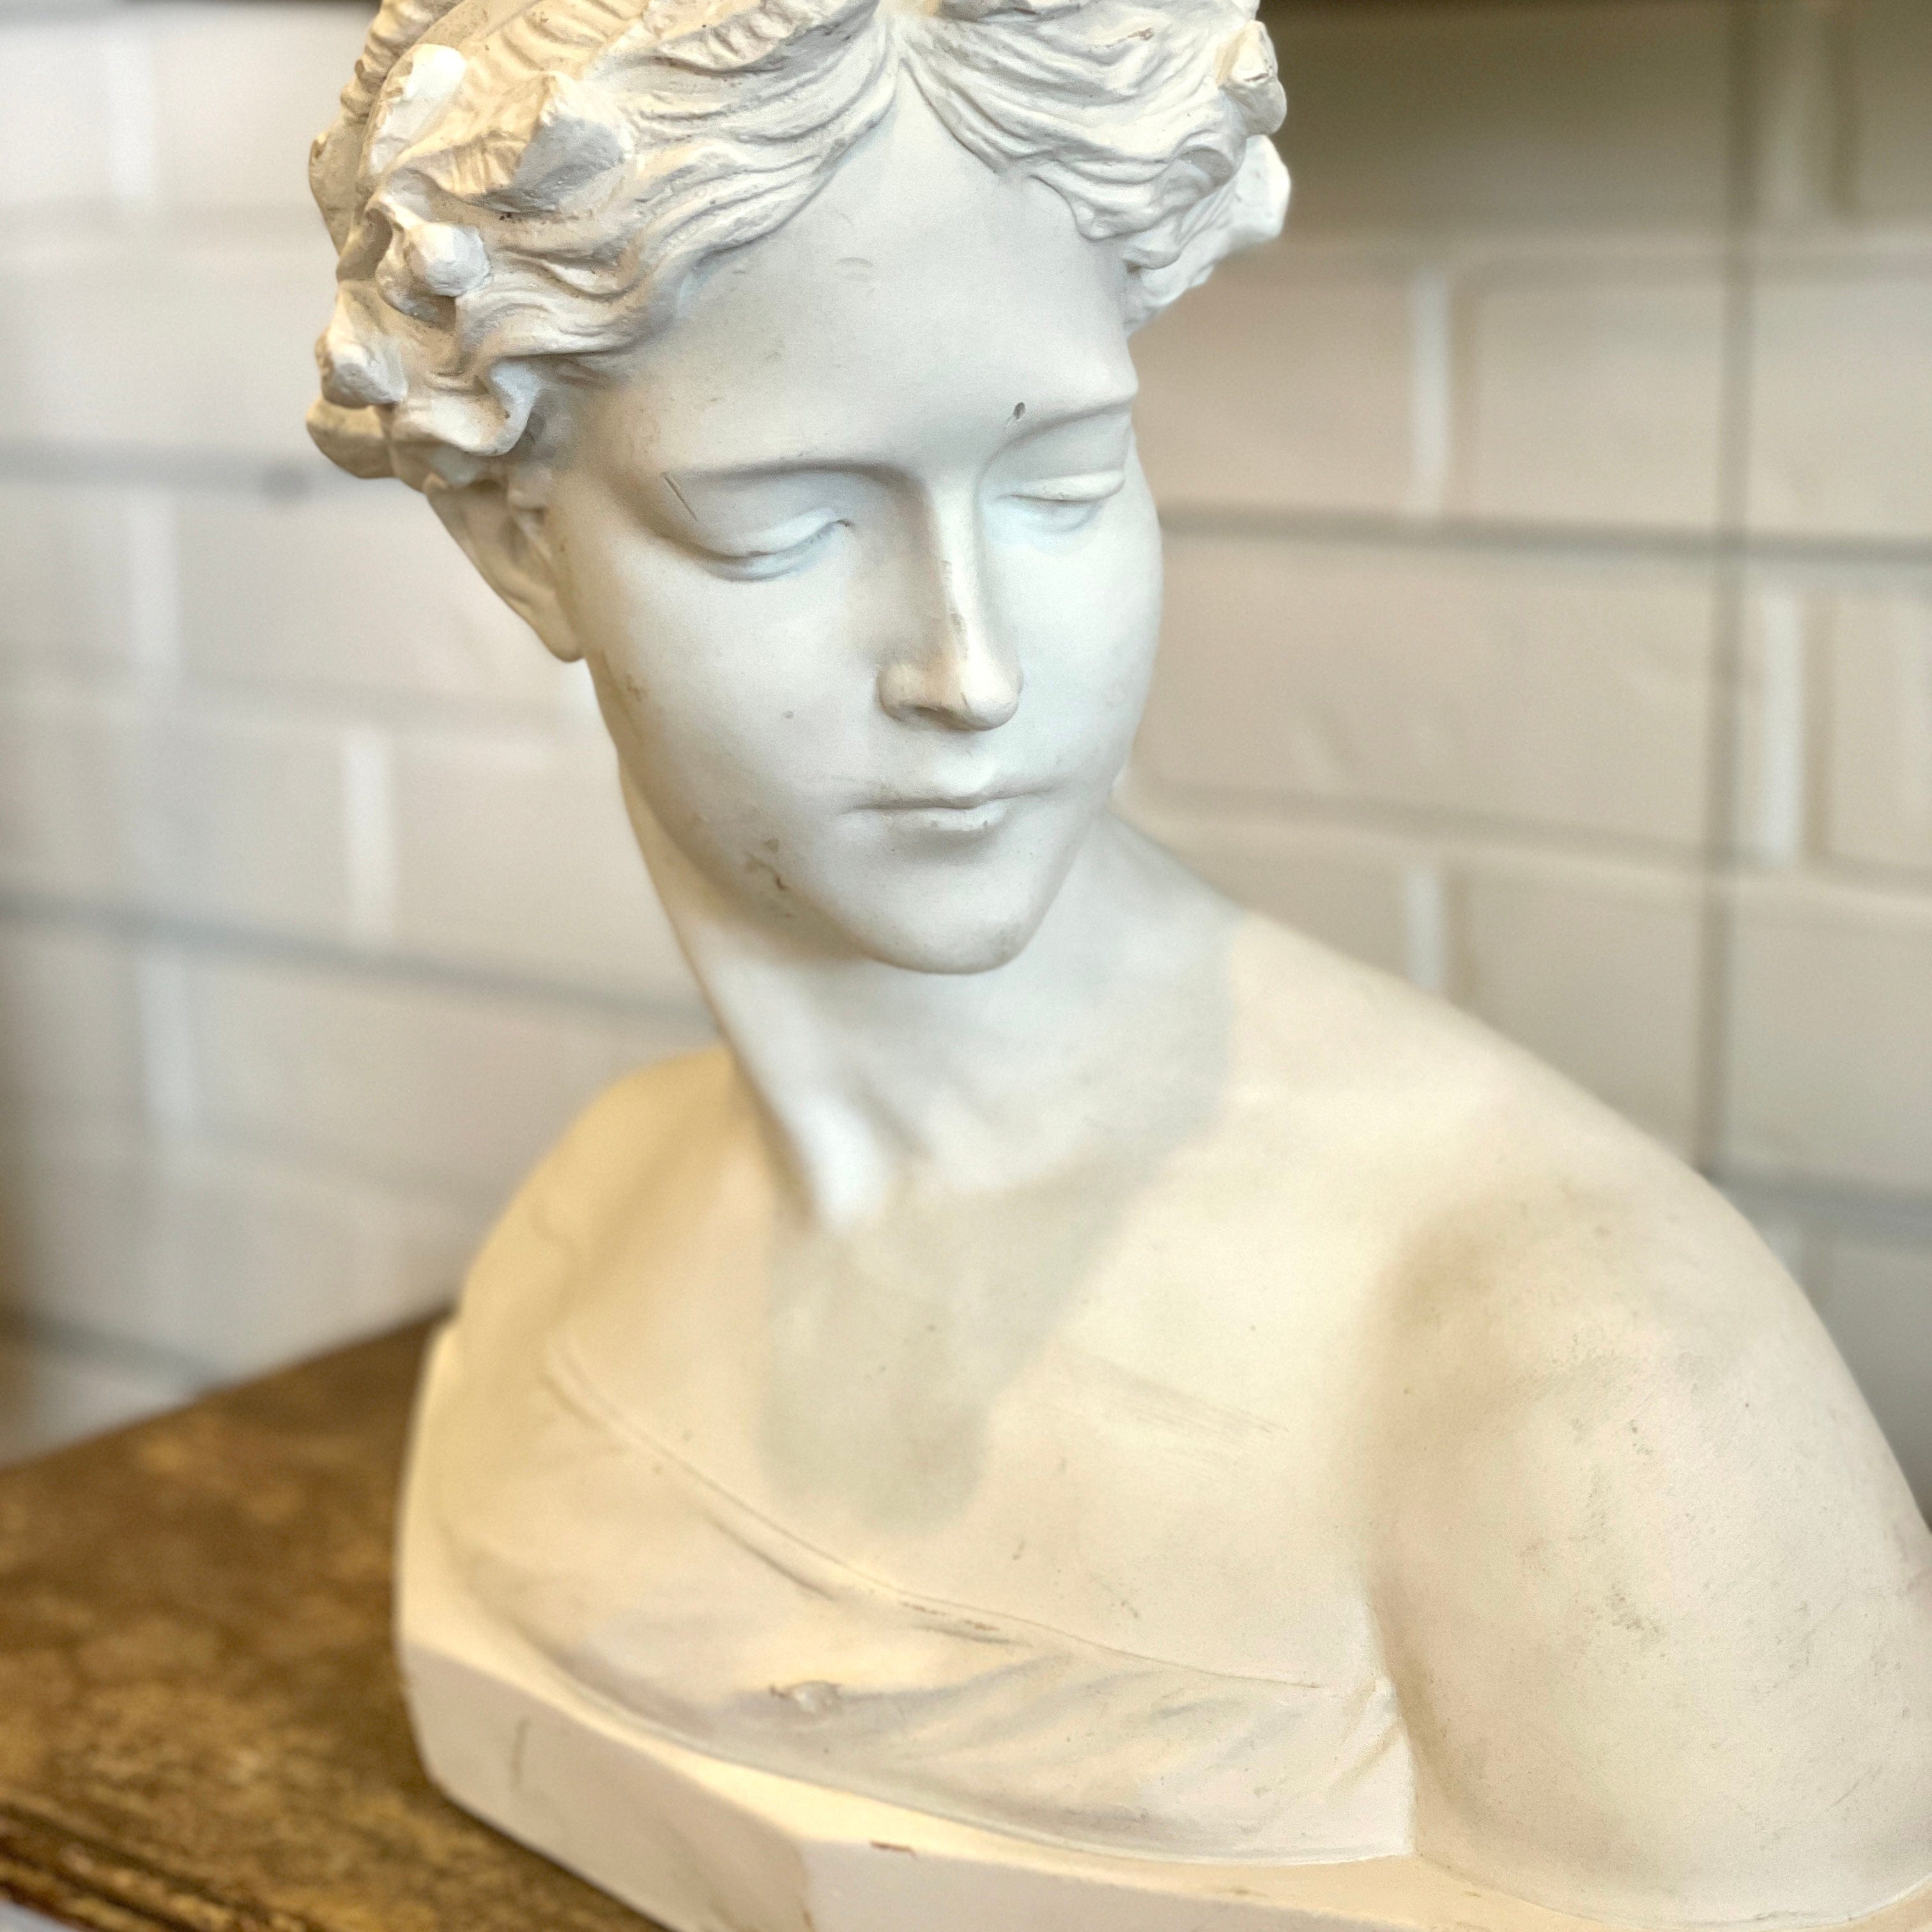 Vintage Plaster Bust - Female in Profile